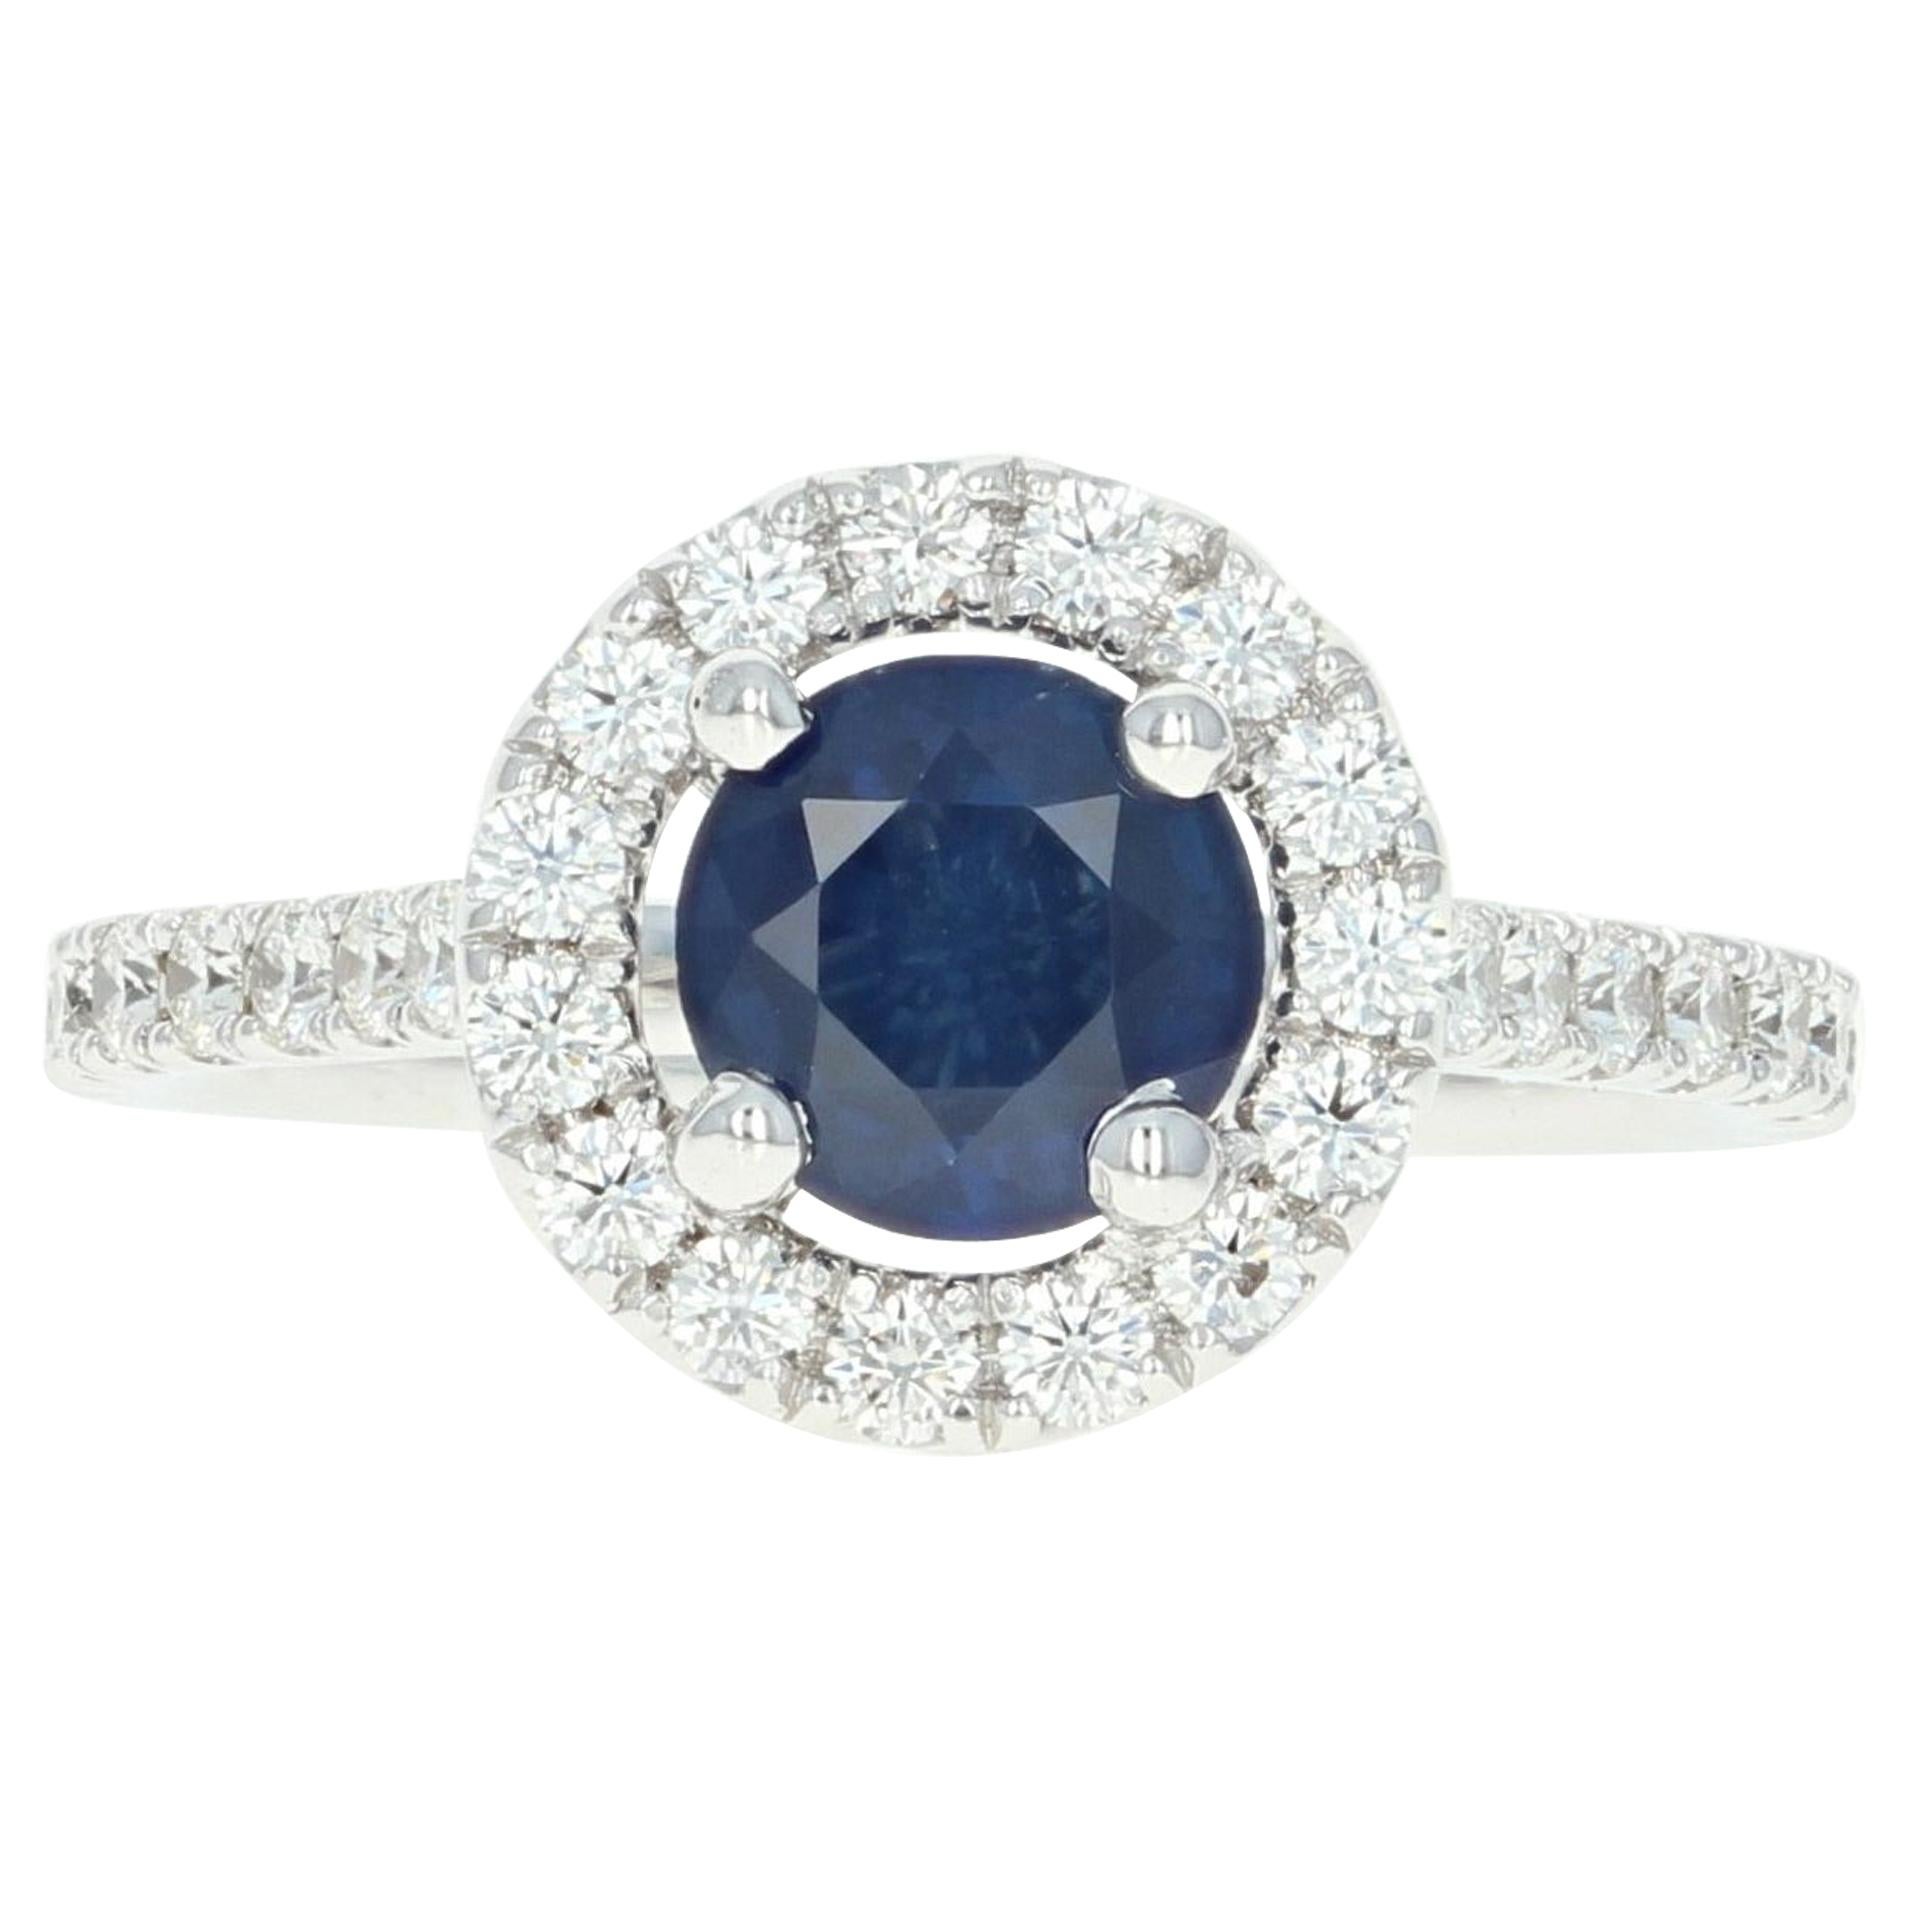 Sapphire and Diamond Halo Ring, 18 Karat White Gold Round Cut 1.82 Carat